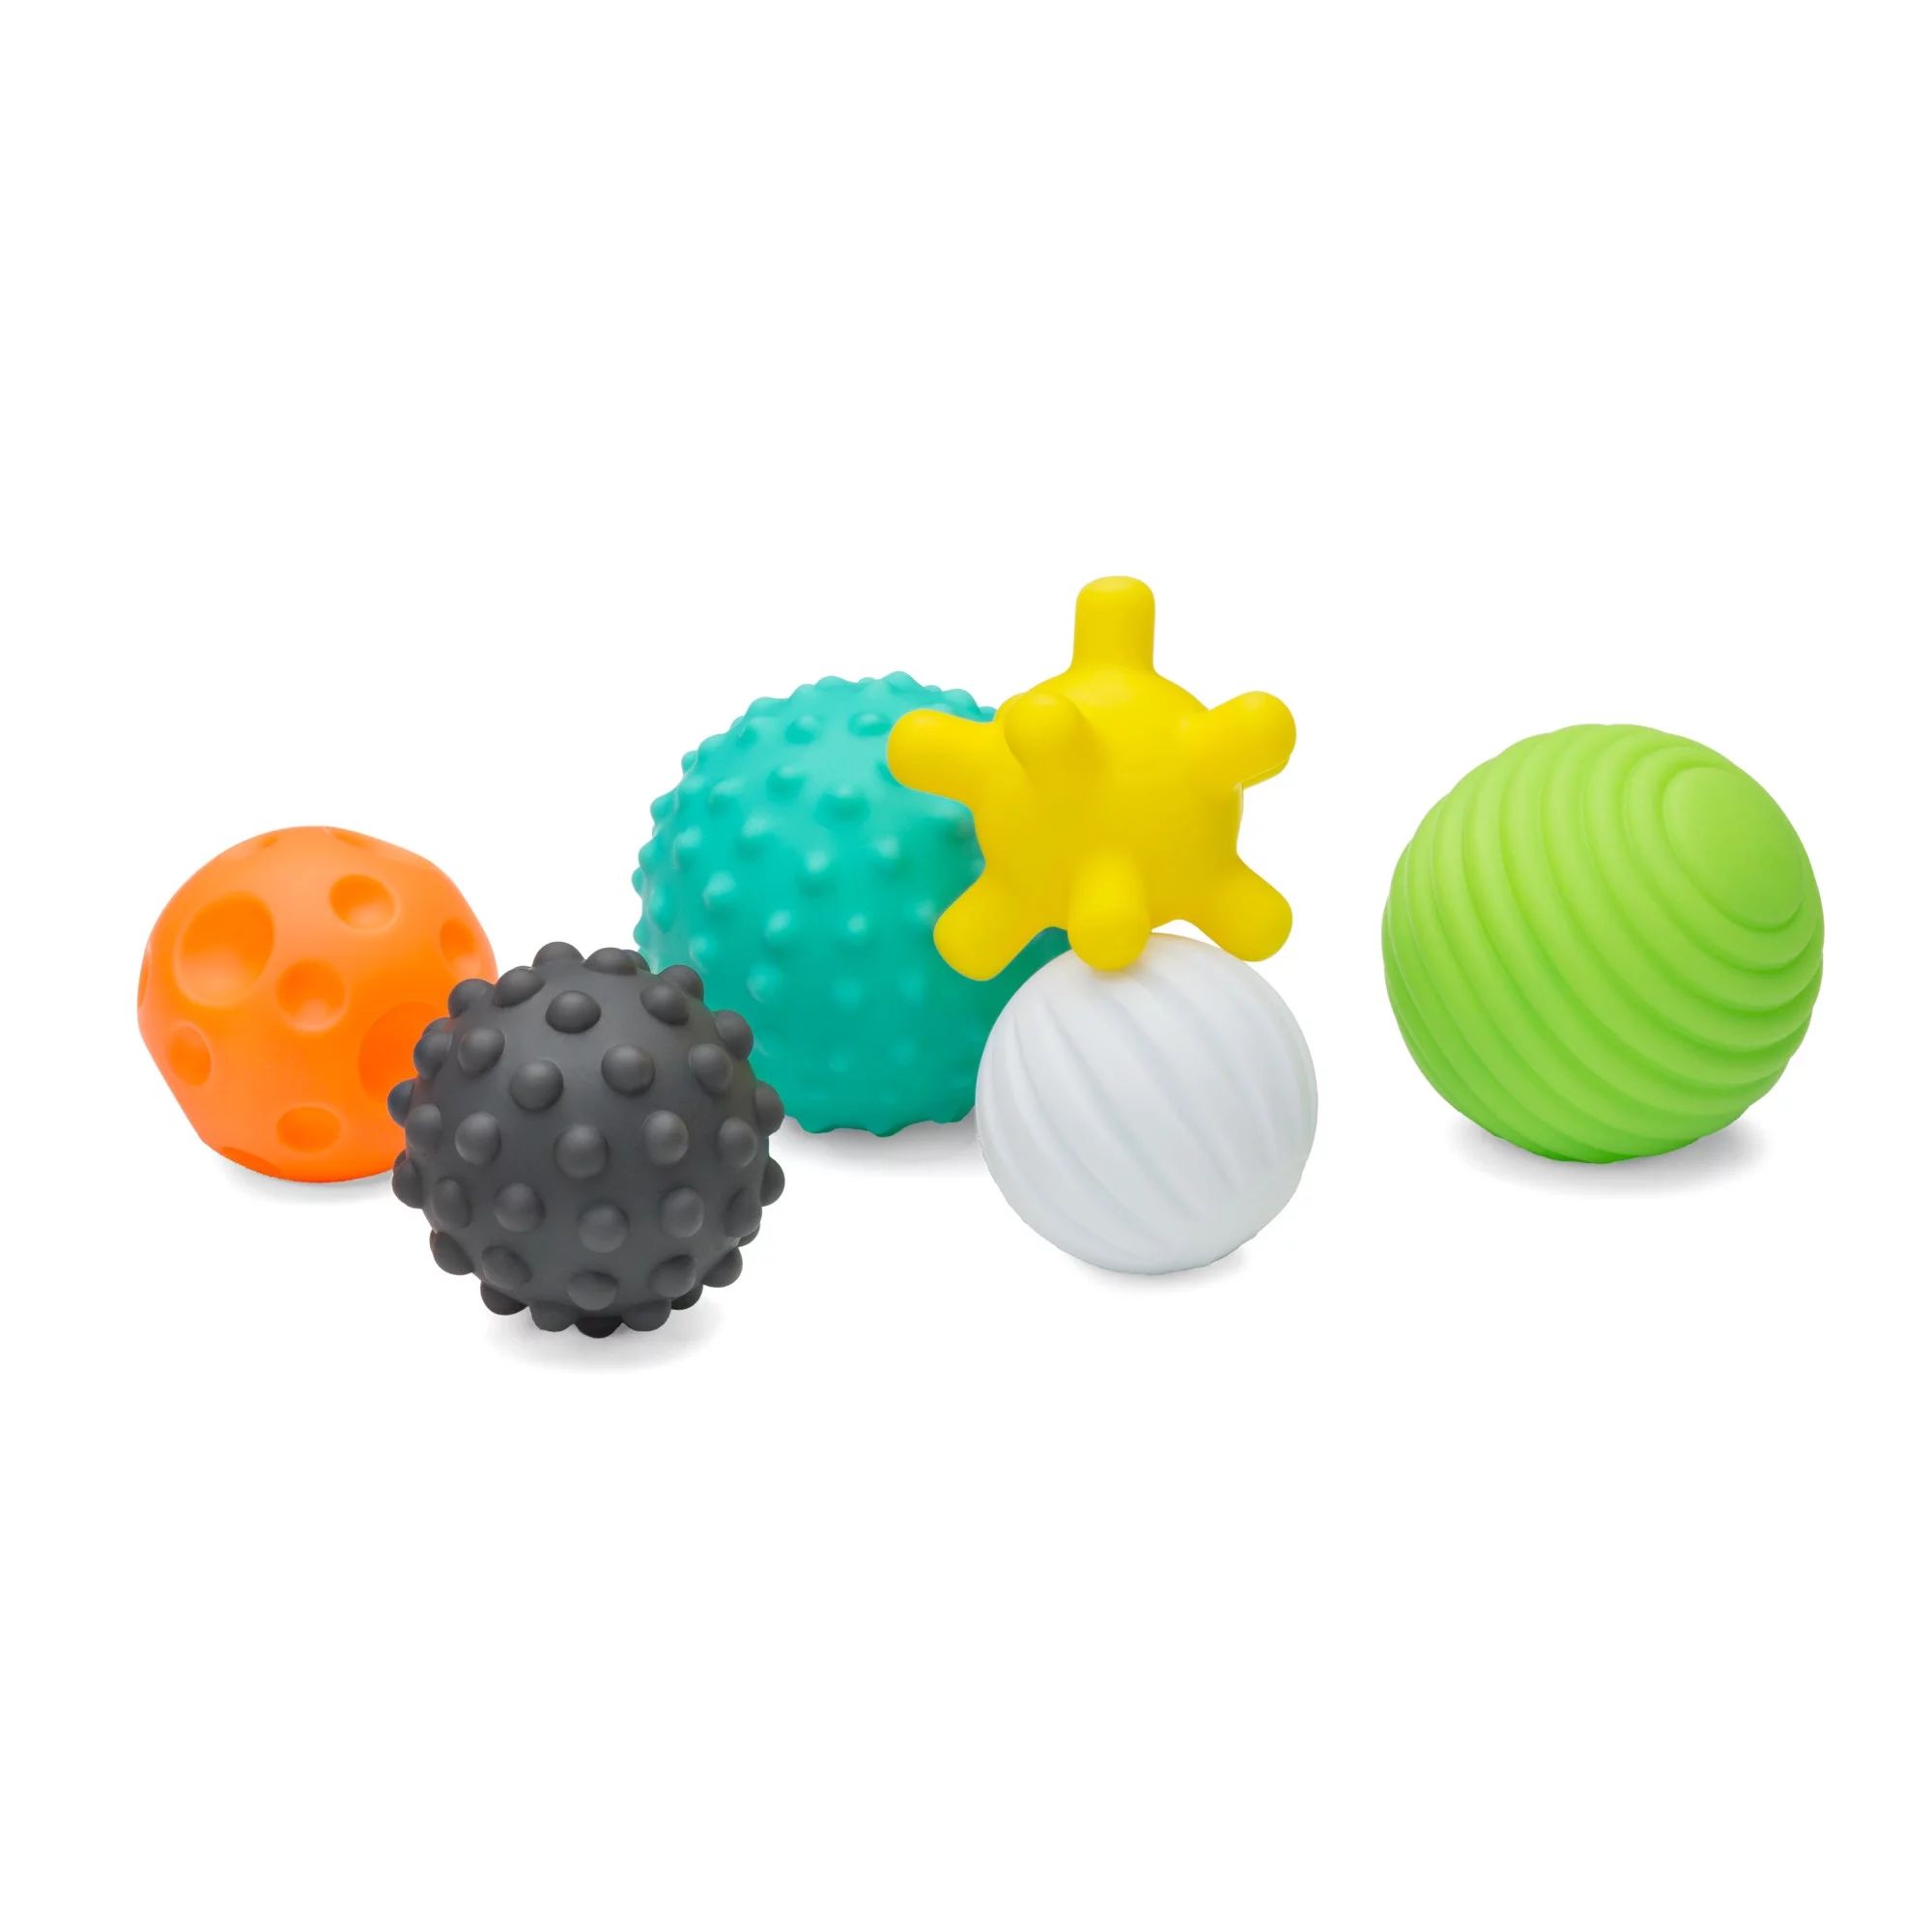 Infantino Textured Multi Ball Set, 6-12 Months, Soft Plastic, Multi-Color, 6-Piece | Walmart (US)